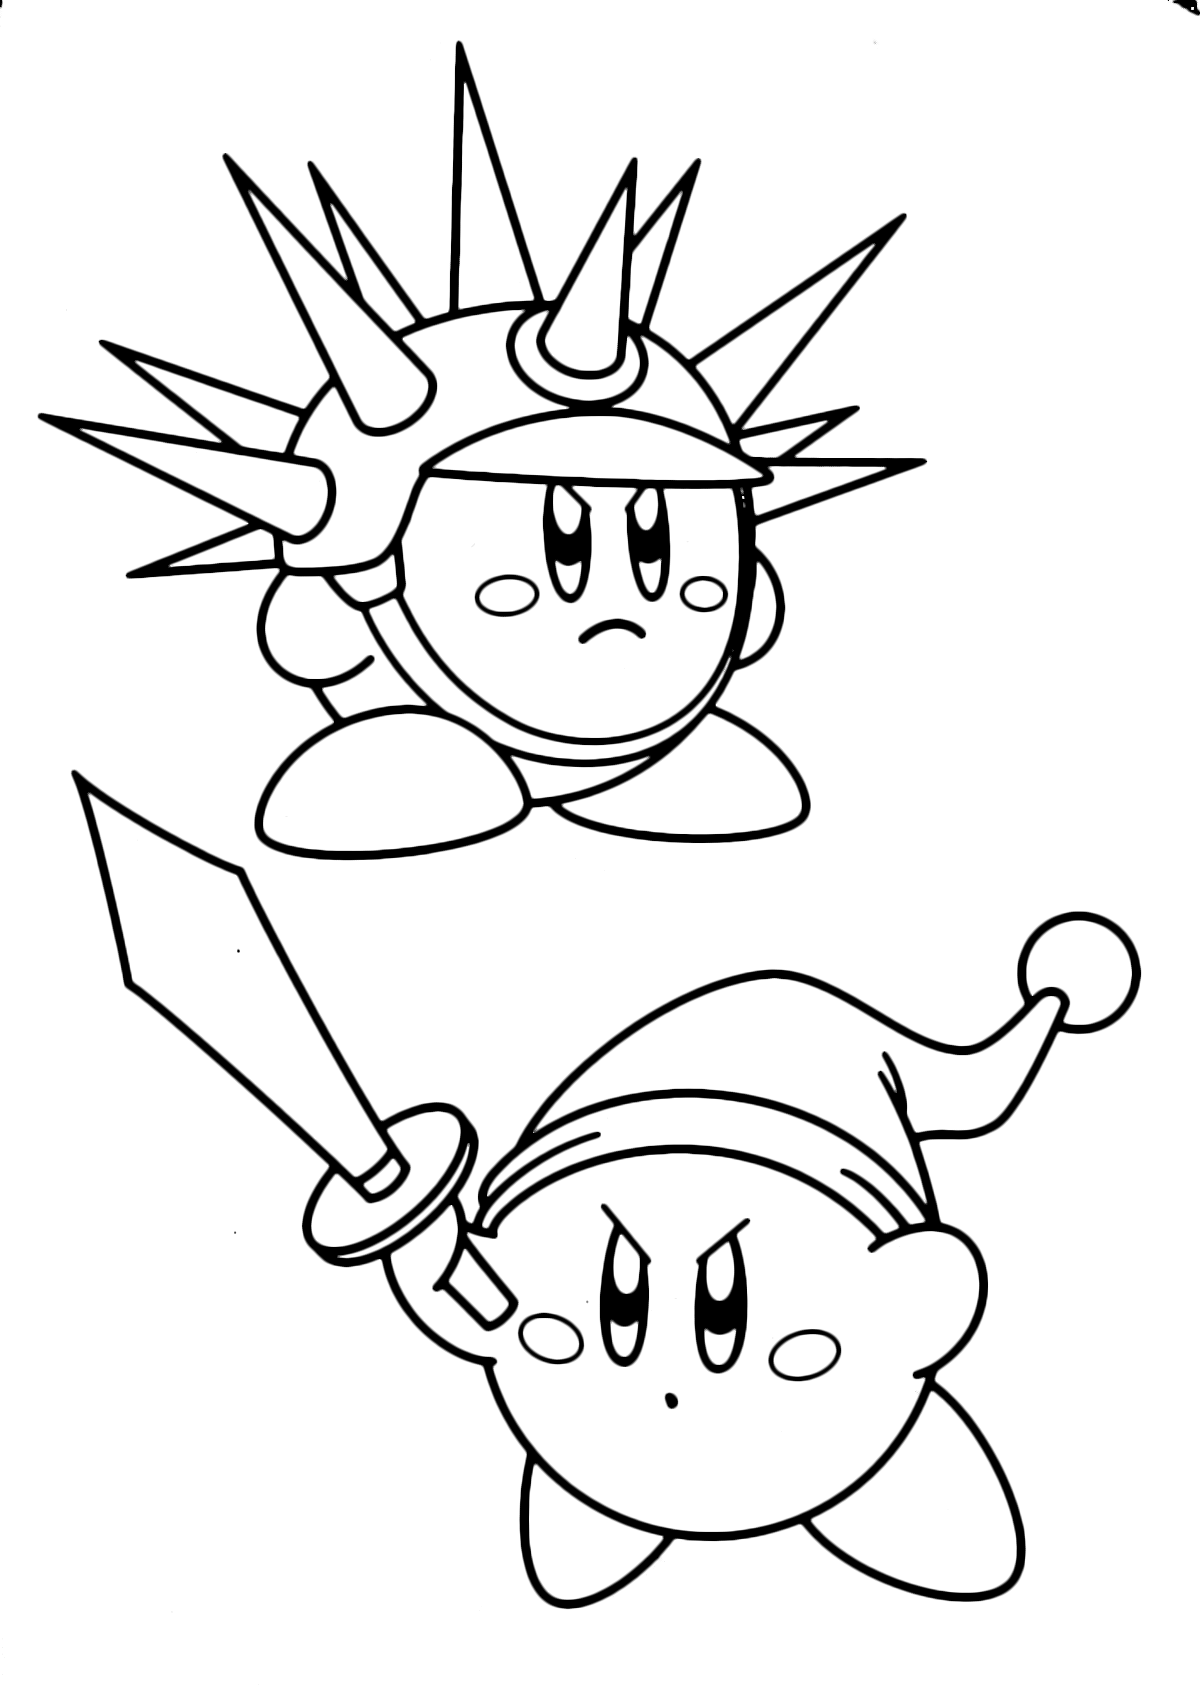 Kirby - Kirby spina e Kirby spada